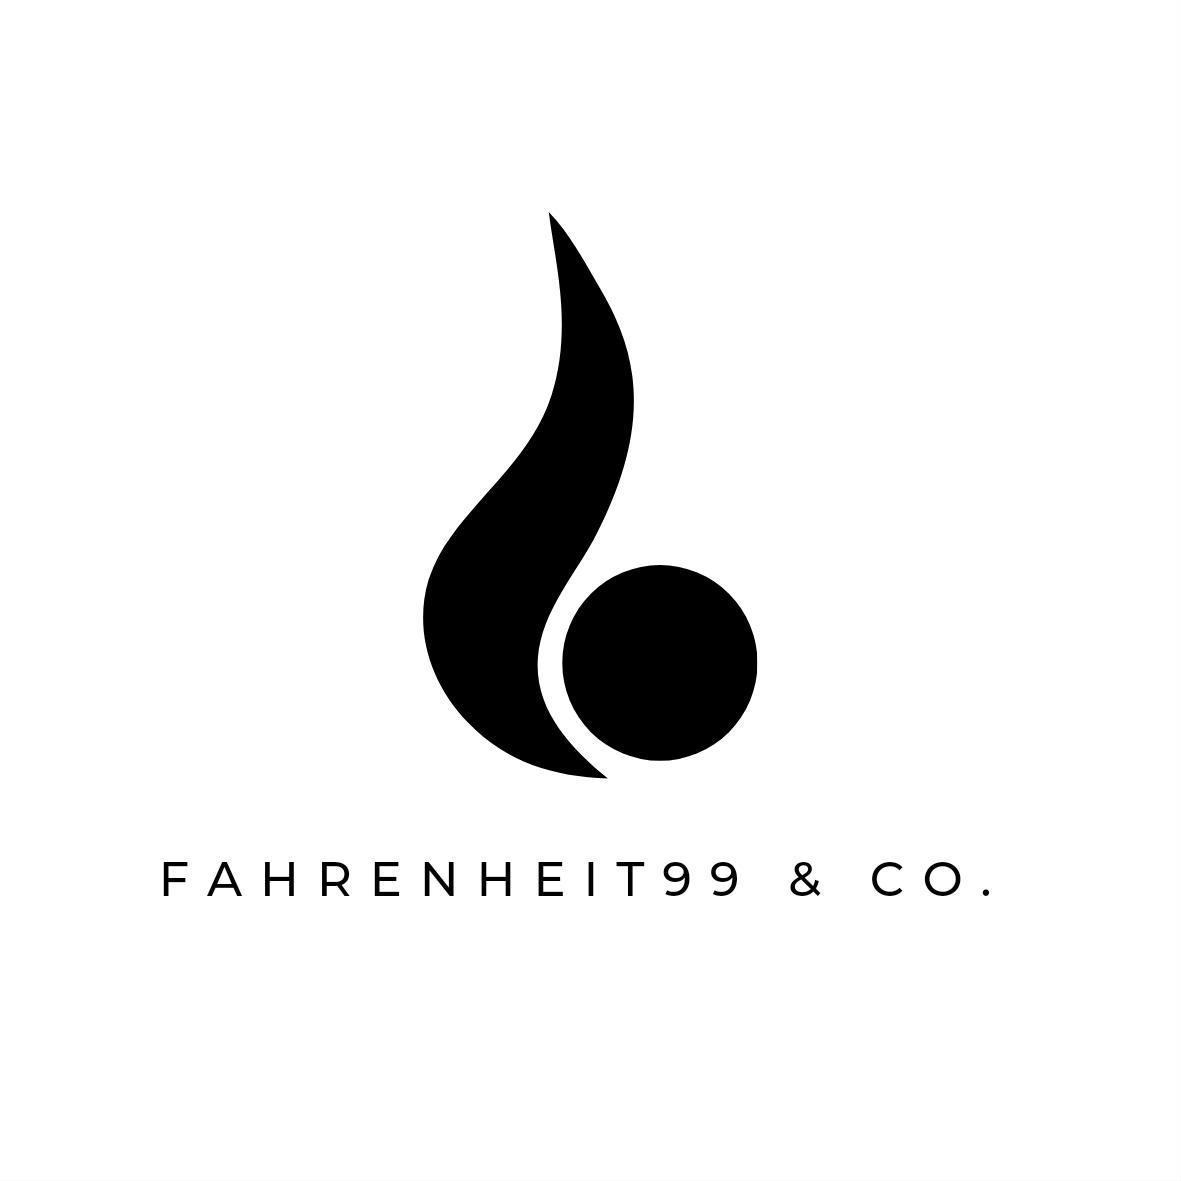 Fahrenheit99 Co's images